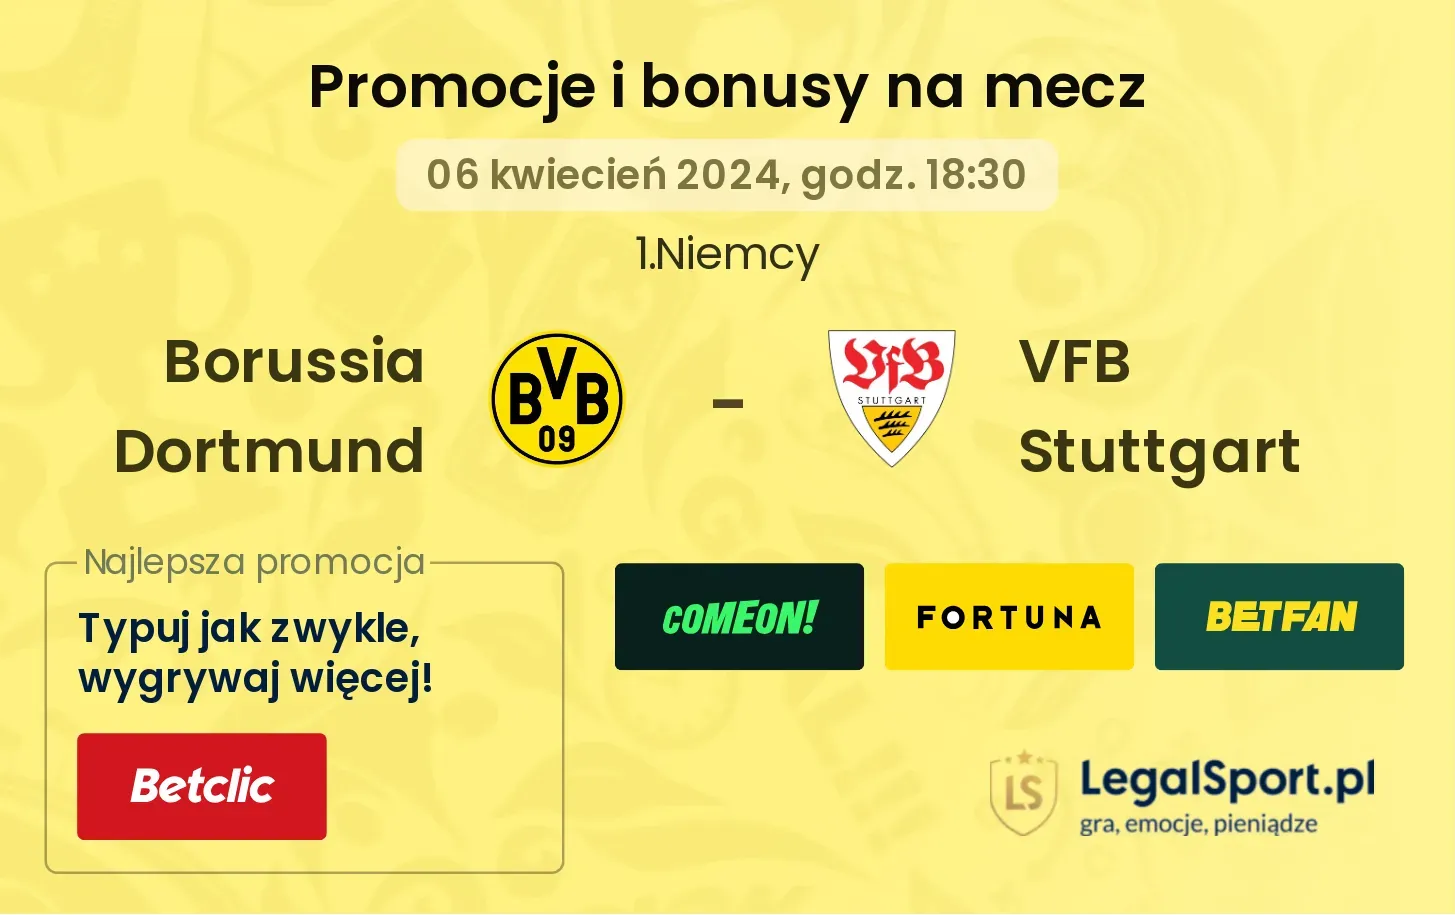 Borussia Dortmund - VFB Stuttgart promocje bonusy na mecz